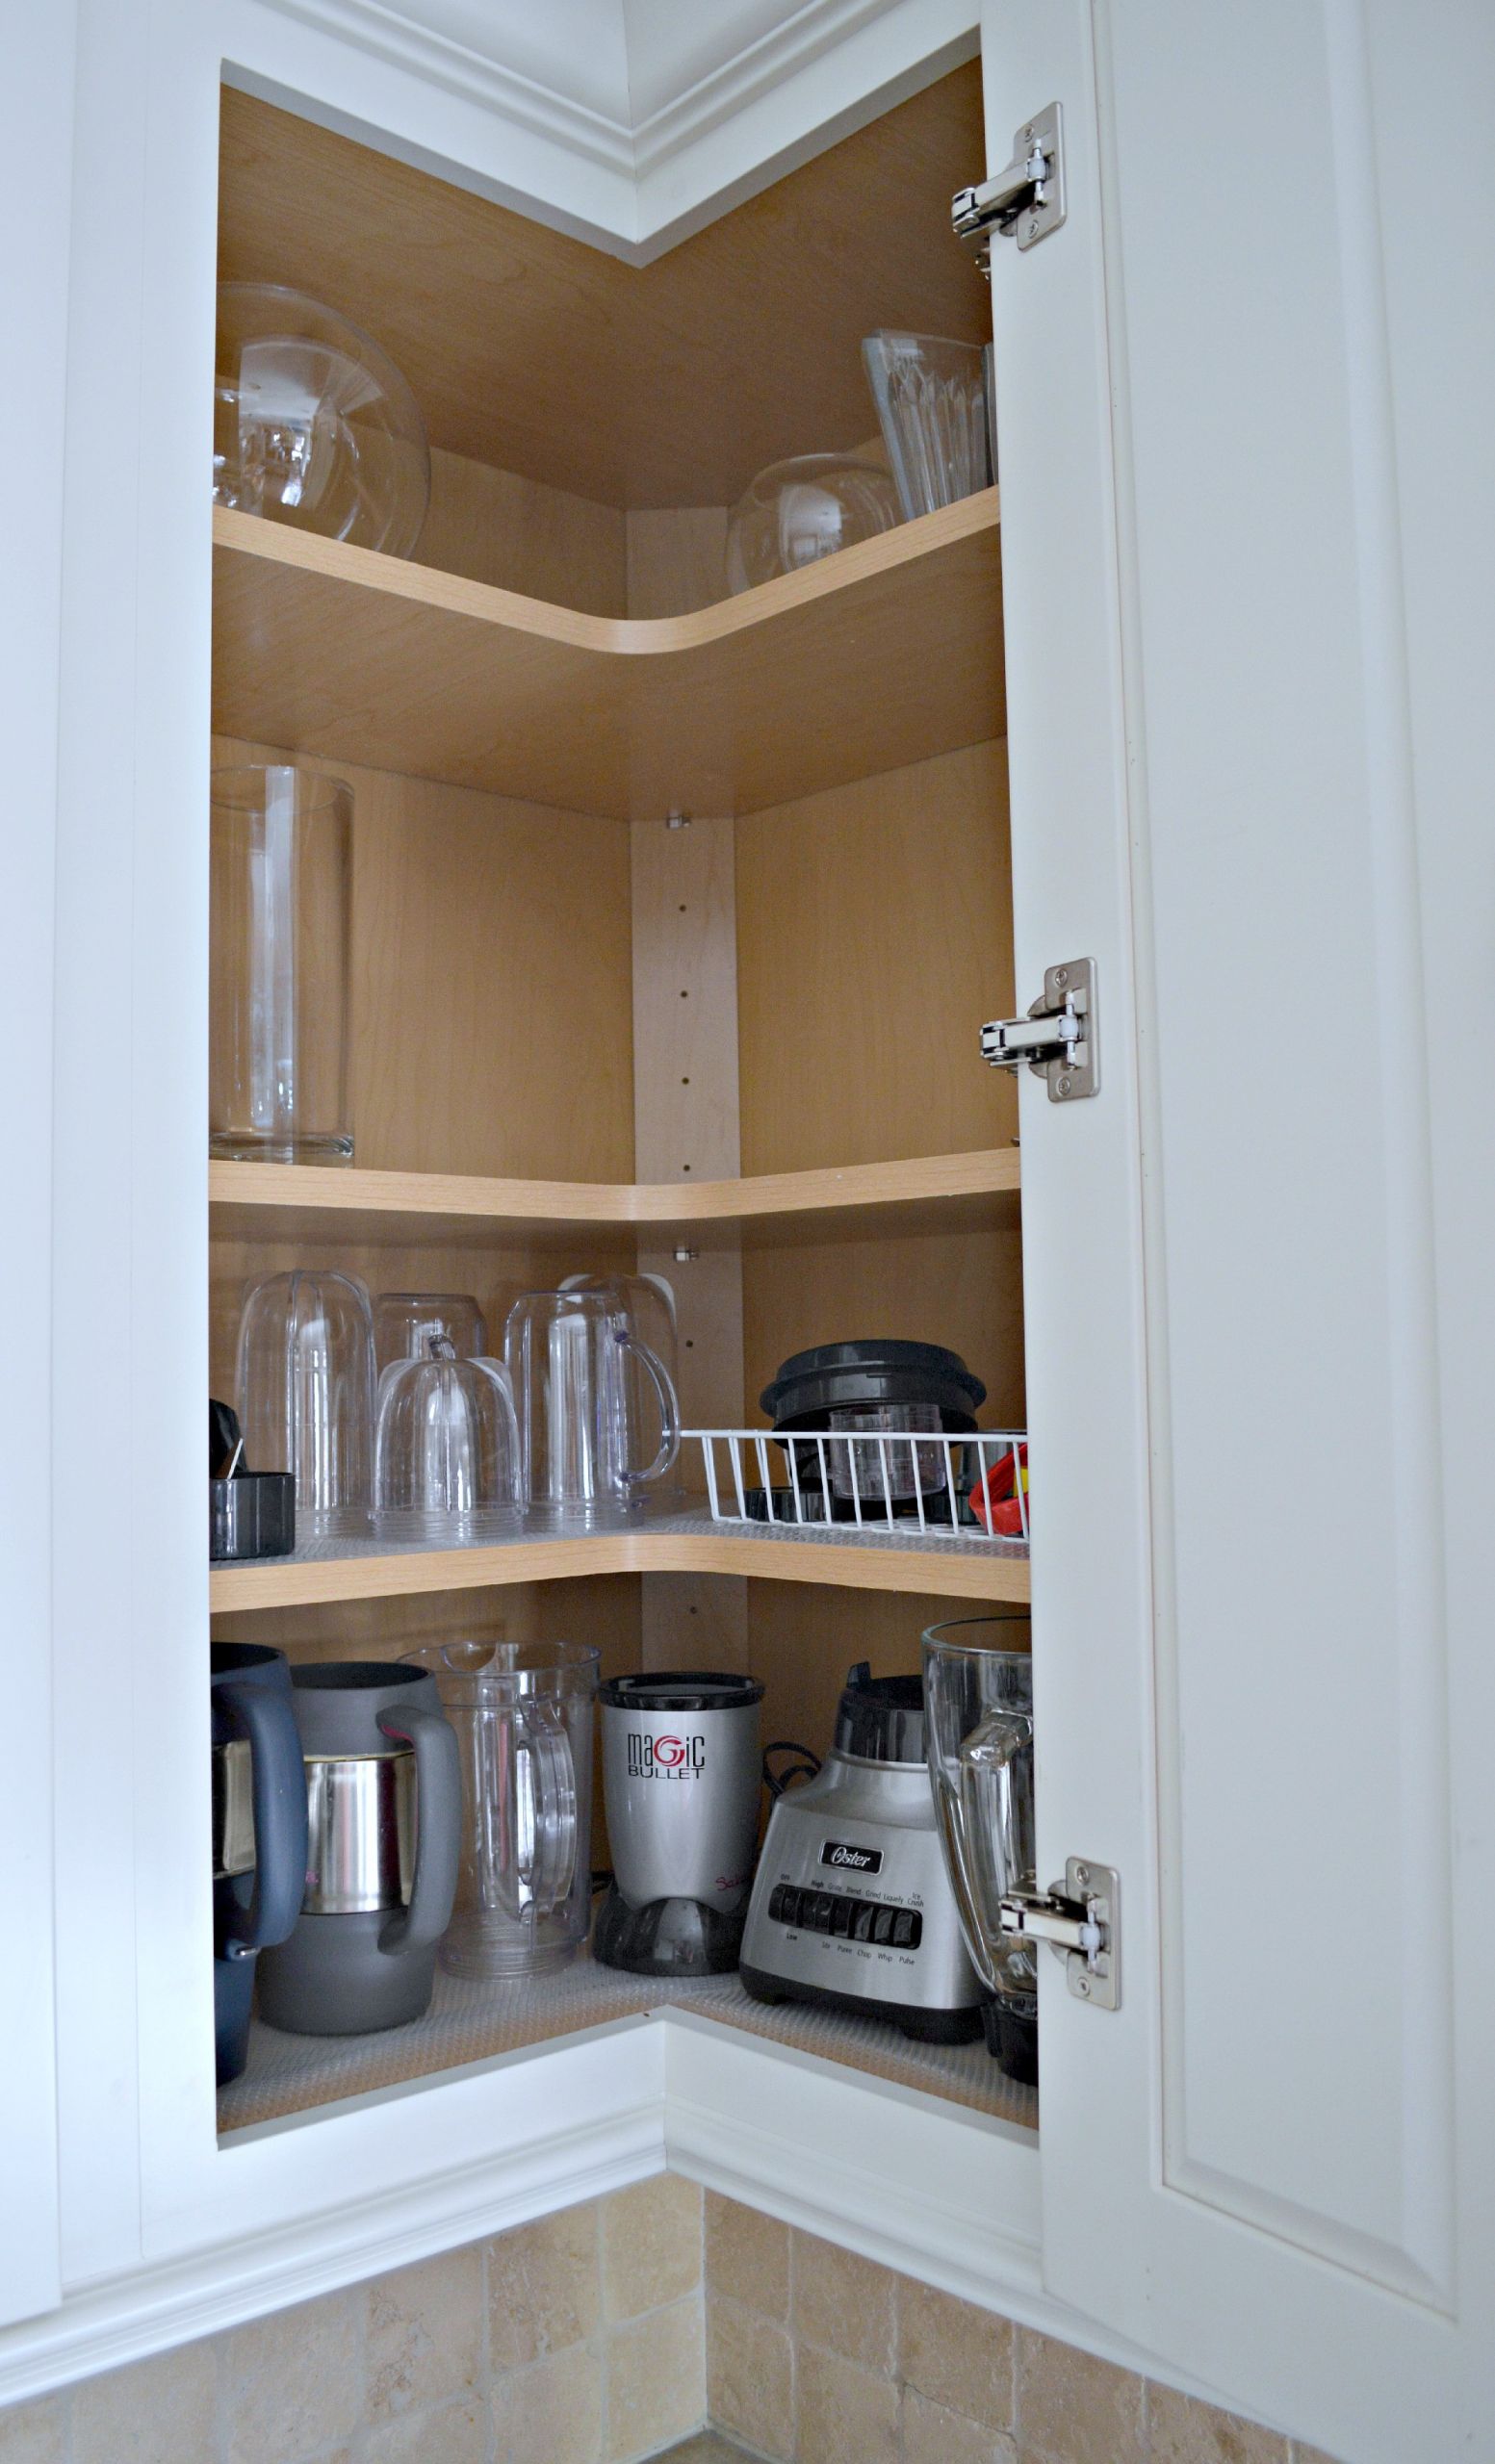 Kitchen Corner Cabinets Ideas
 Tips For Designing An Organized Kitchen